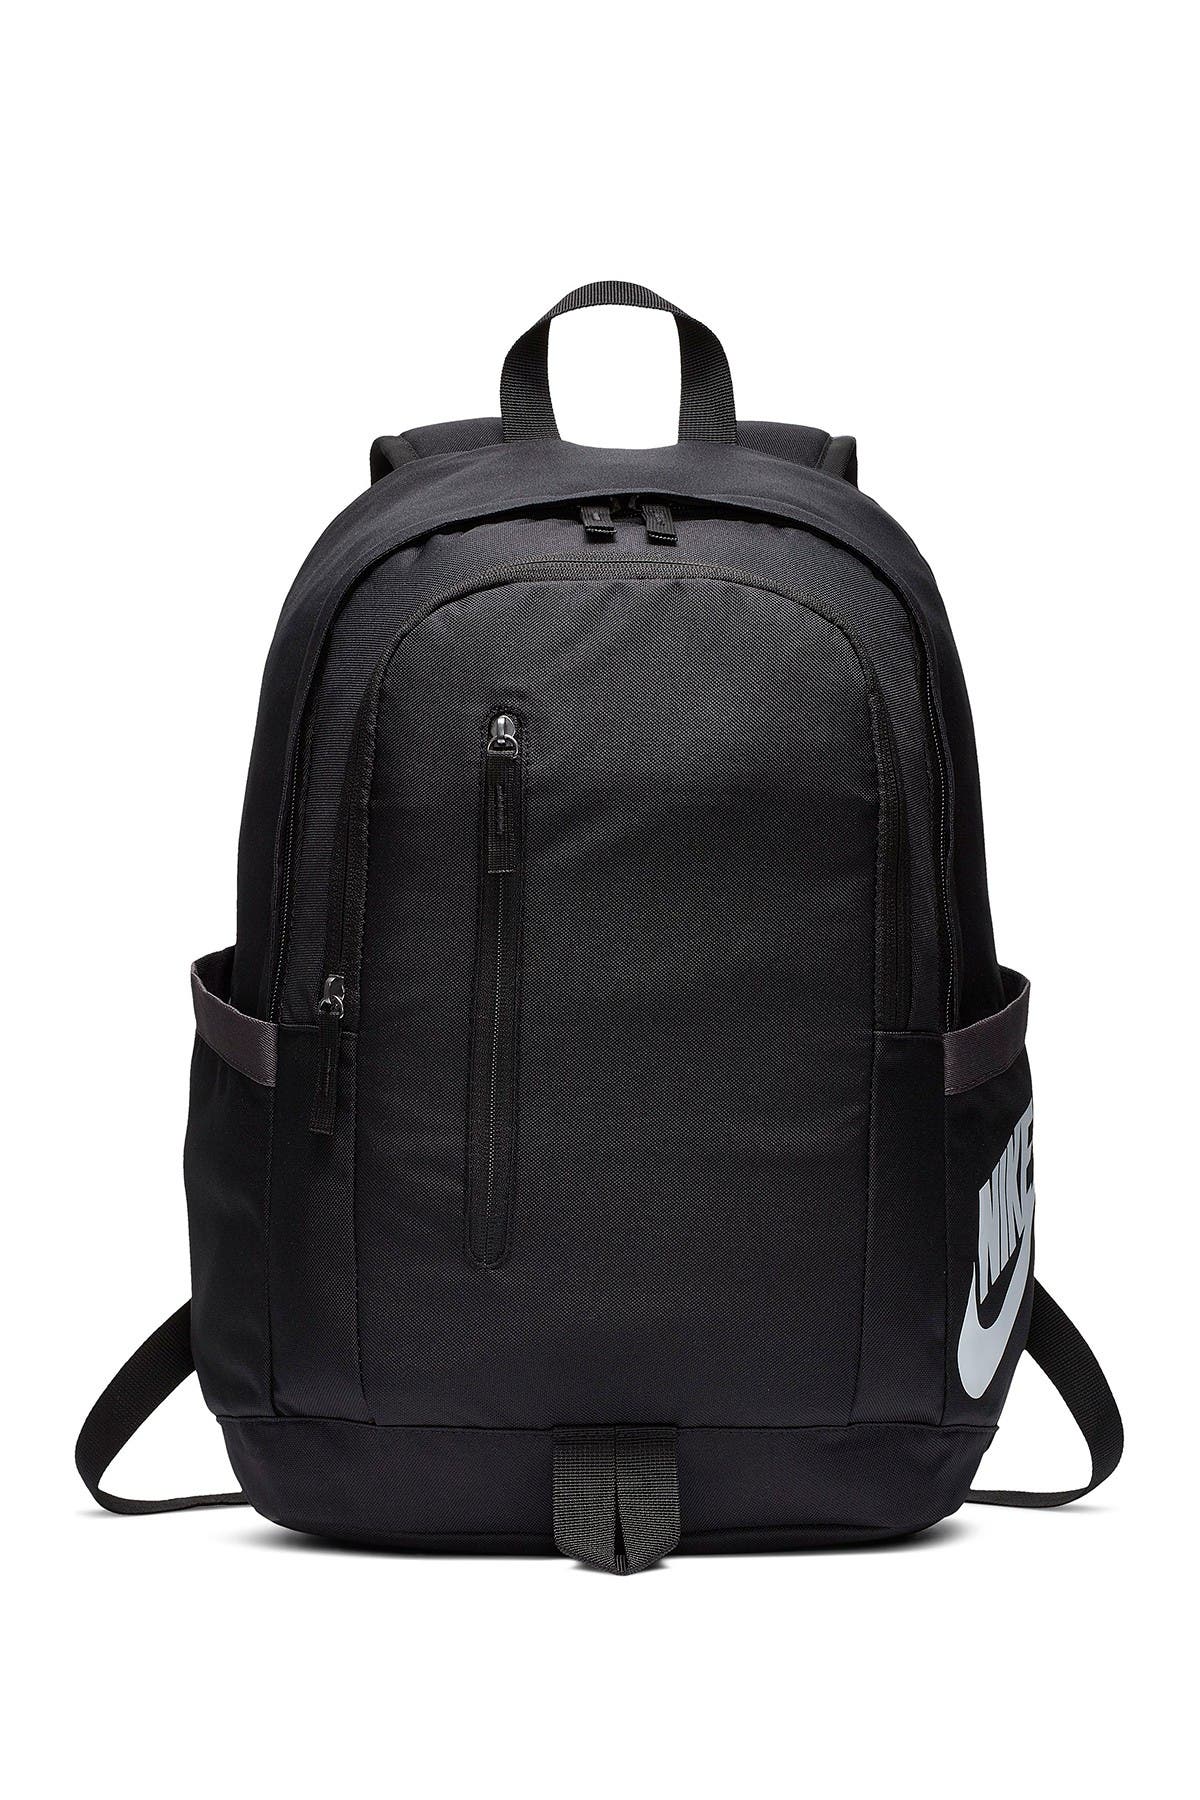 nike access soleday backpack